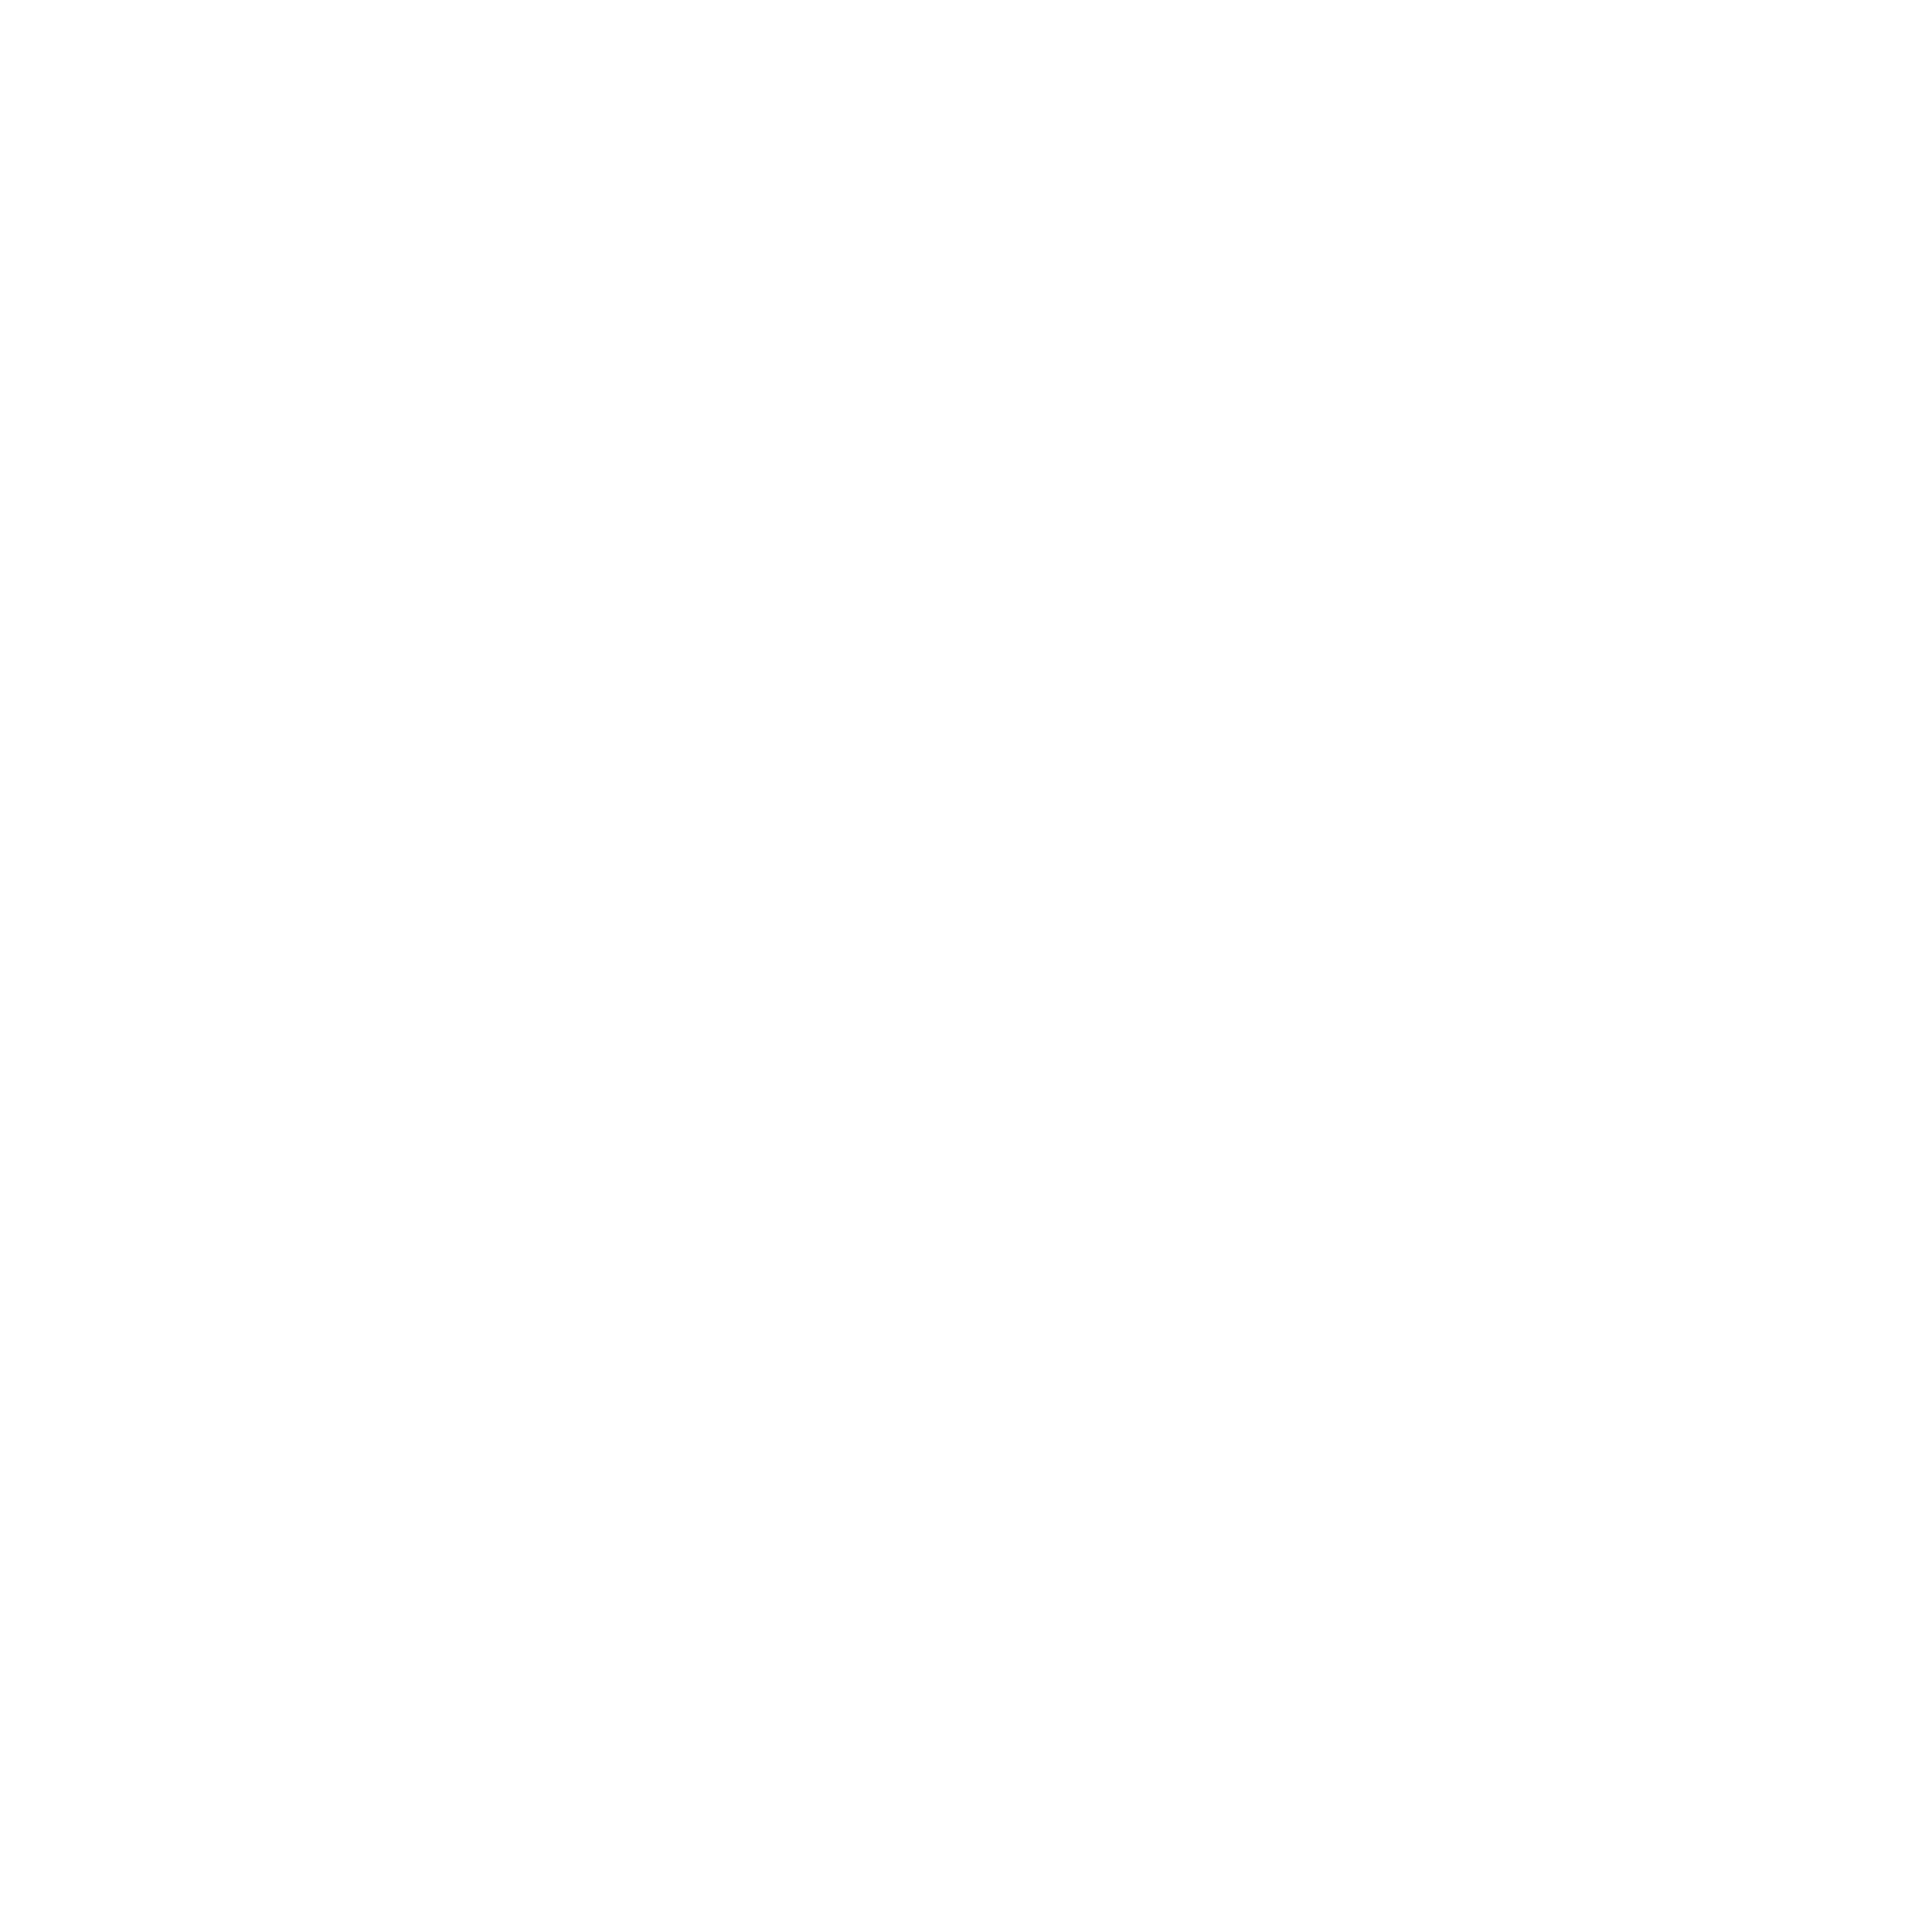 The Rock Worship Center